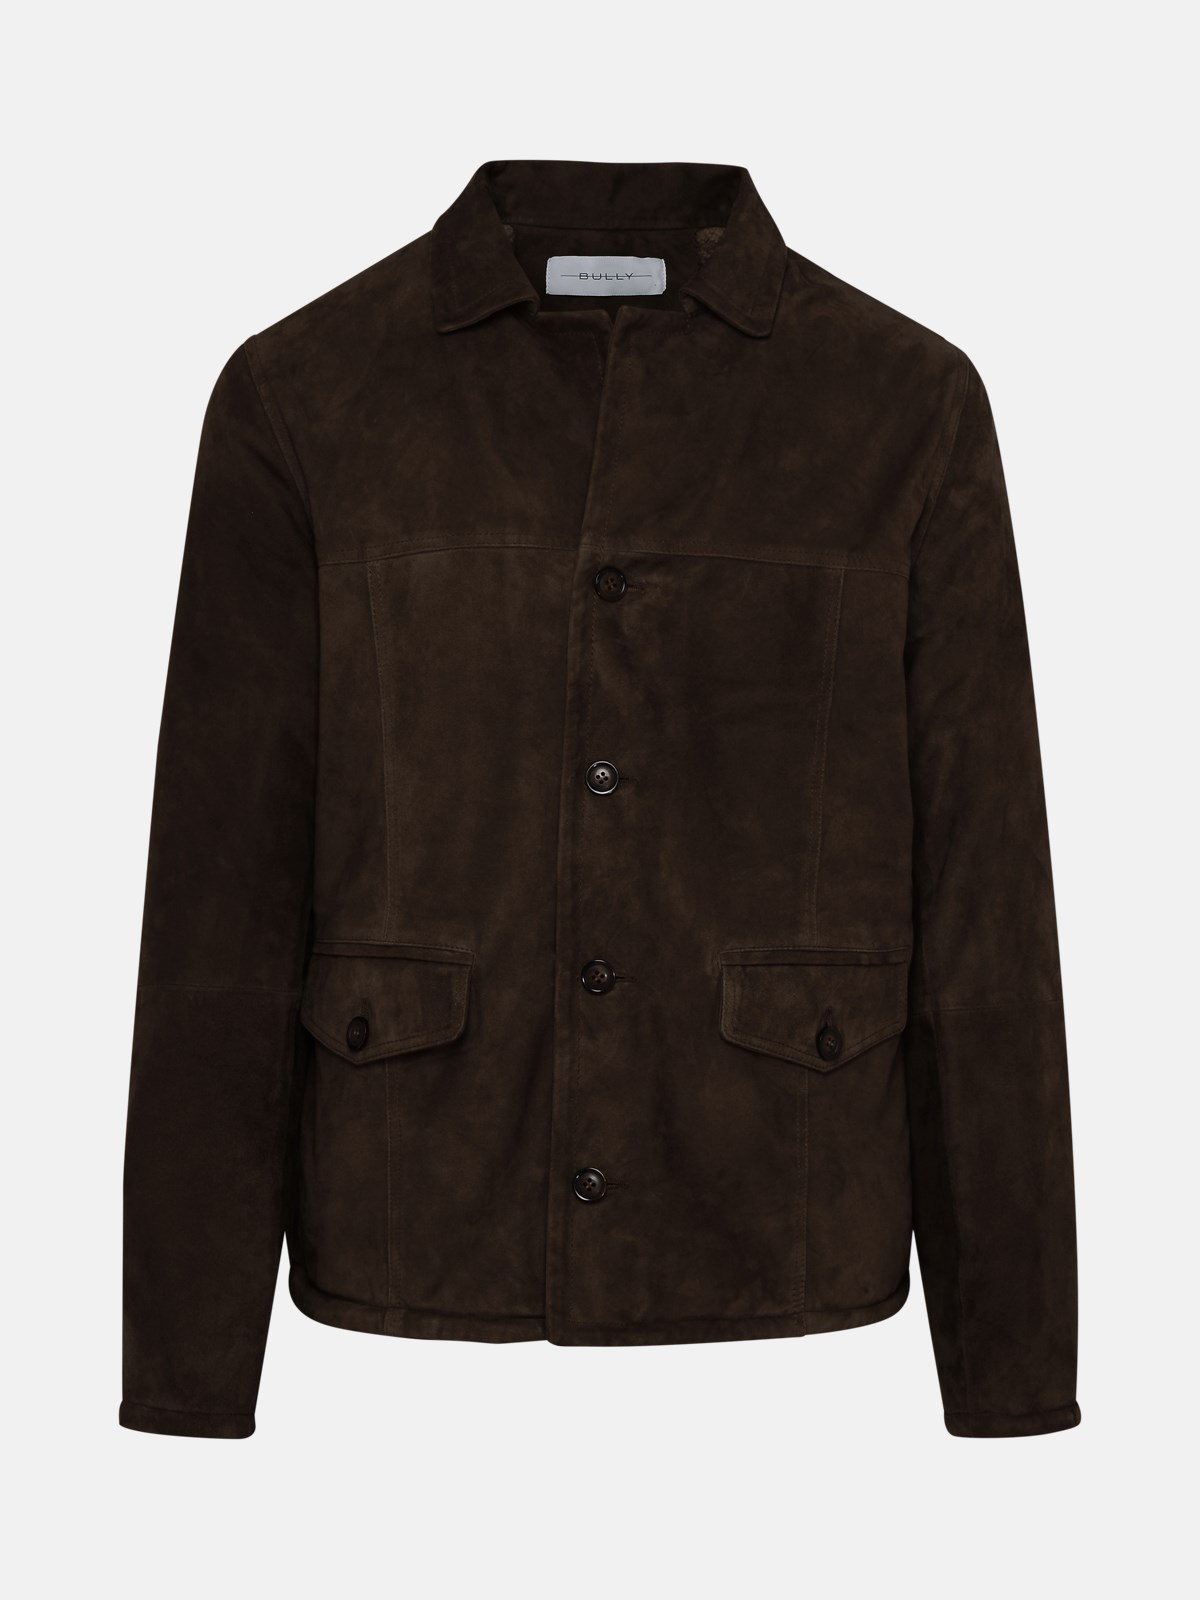 Bully Brown Genuine Leather Jacket